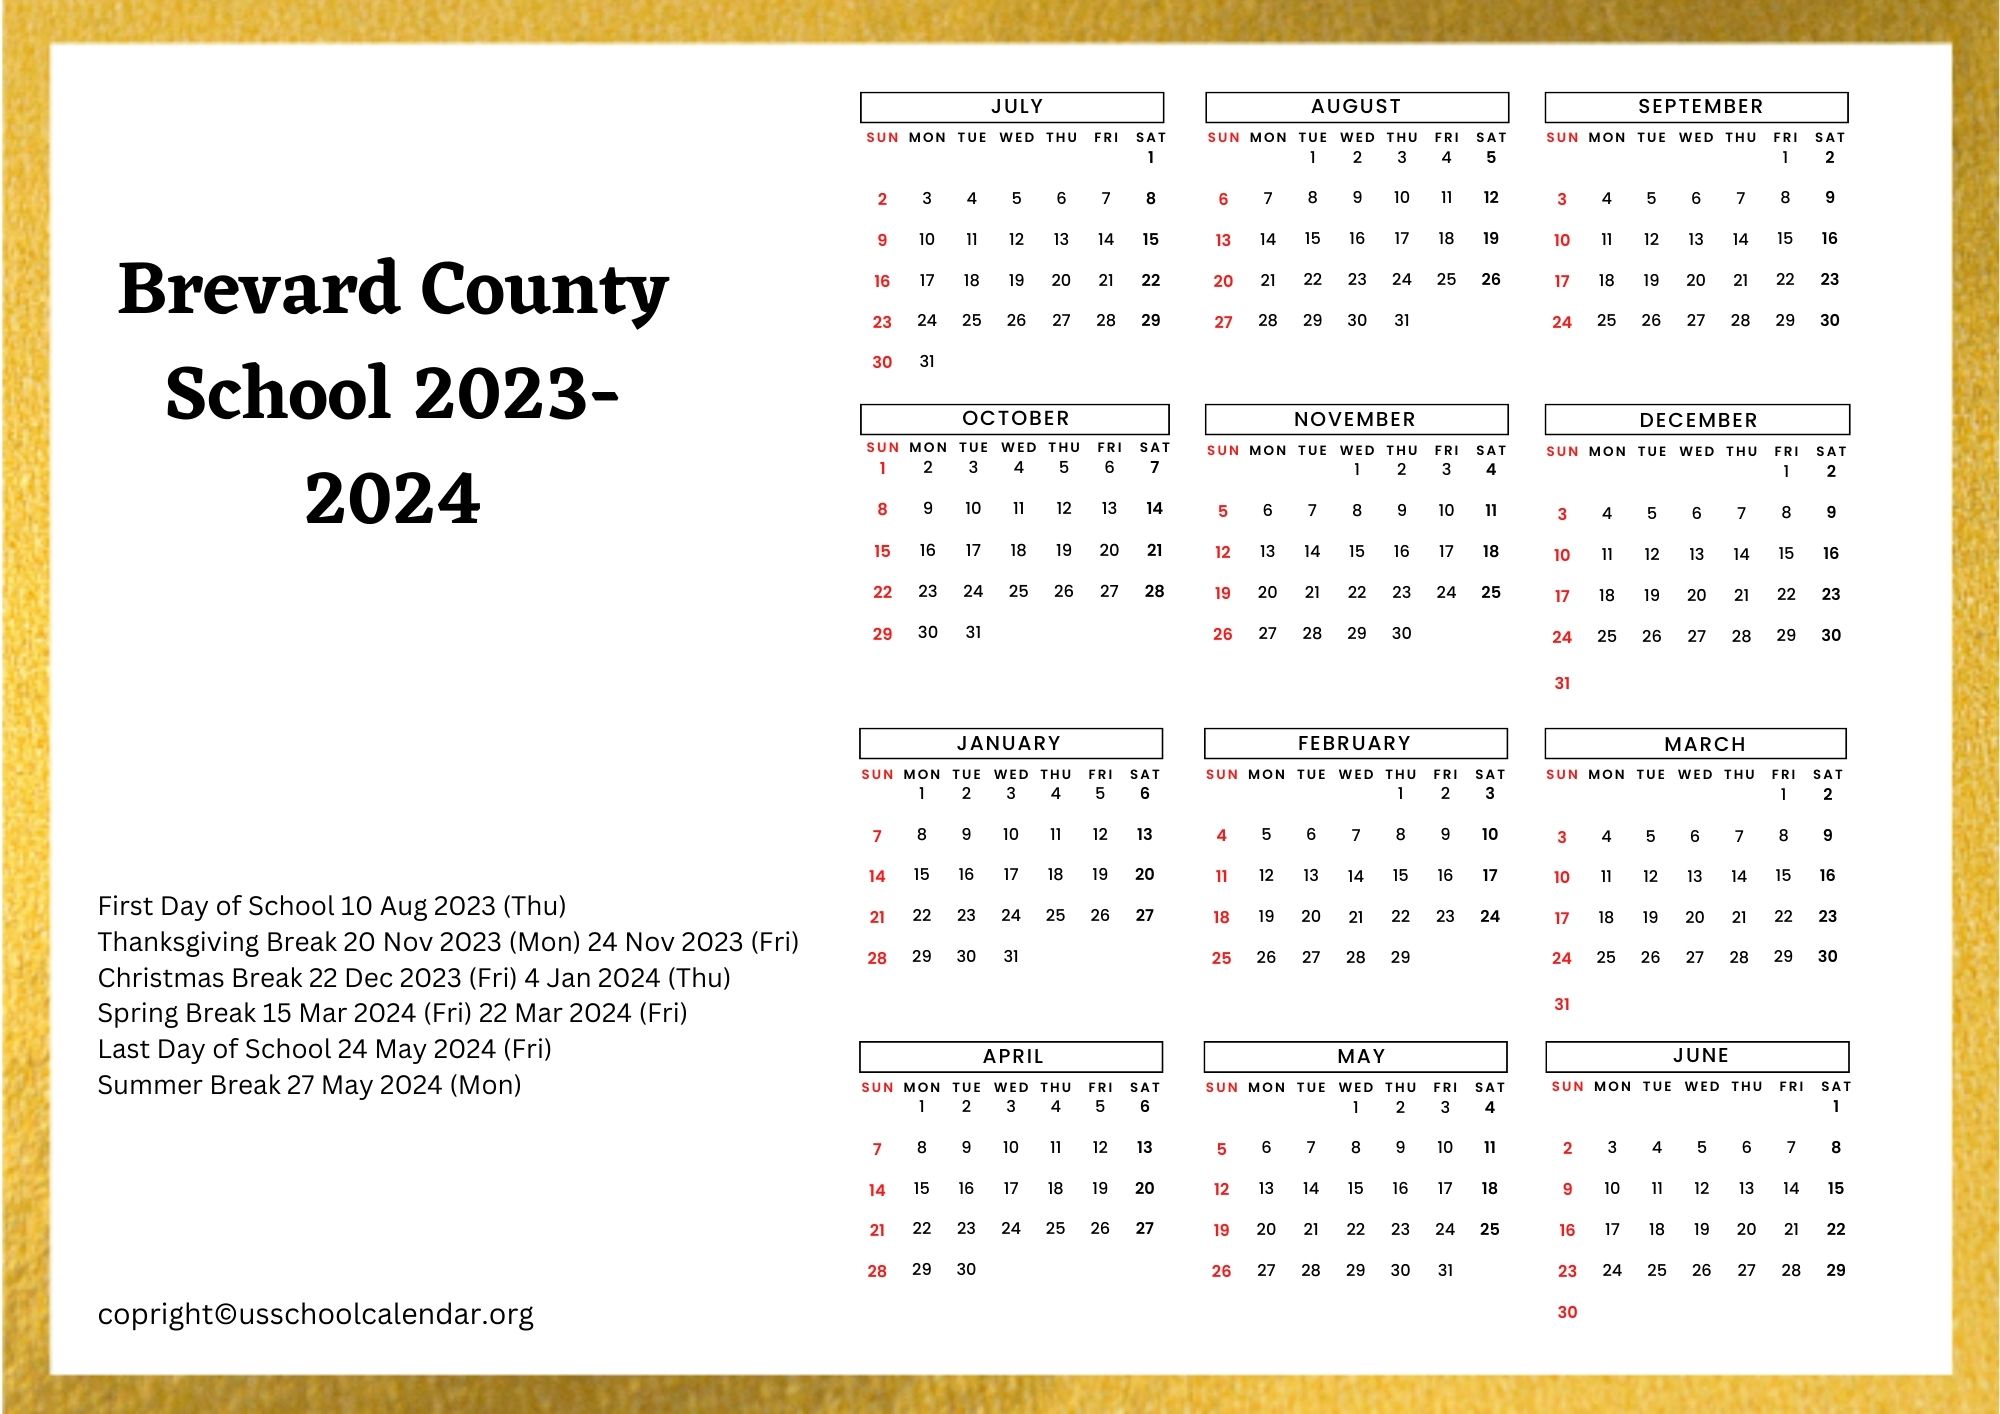 Brevard County School Calendar With Holidays 2023 2024